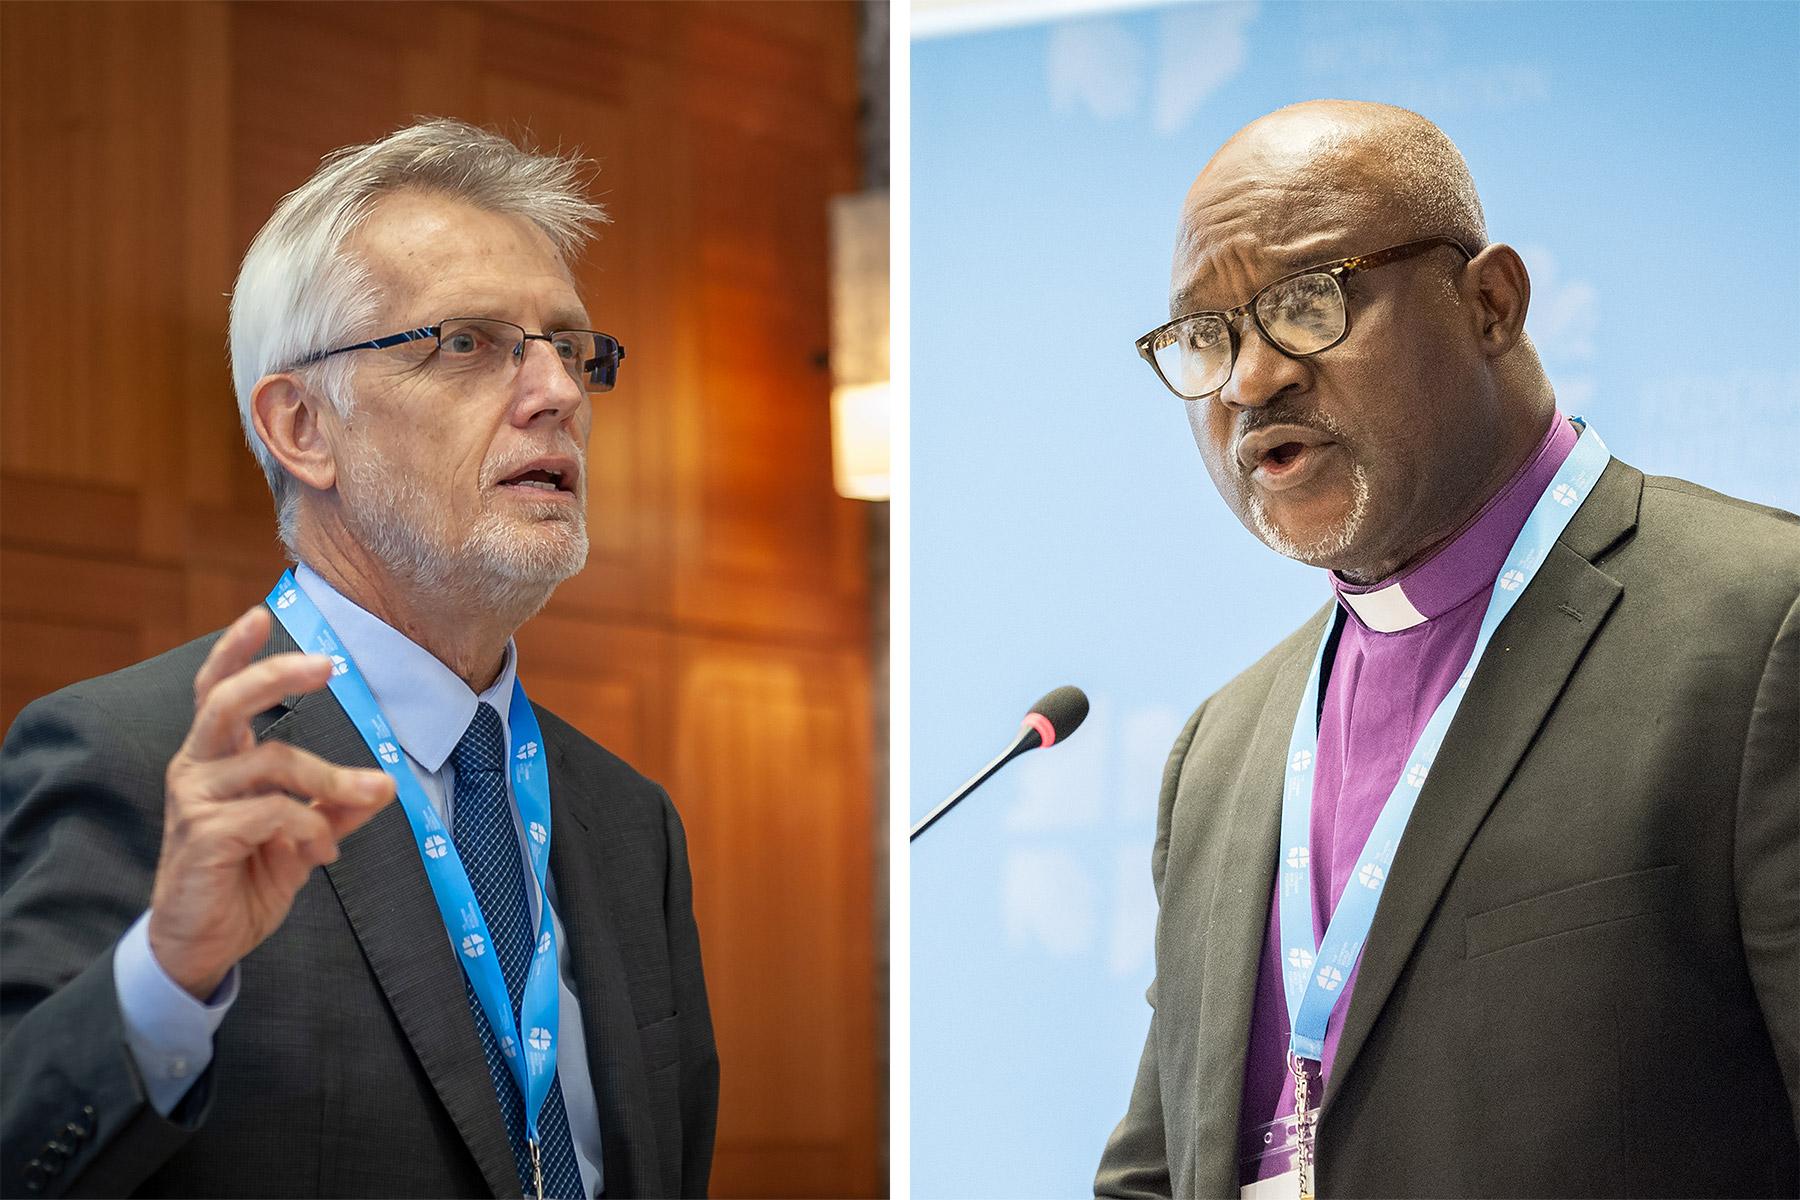 LWF General Secretary Rev Dr Martin Junge (left) and President Archbishop Dr Panti Filibus Musa. Photos: LWF/S. Gallay and LWF/Albin Hillert